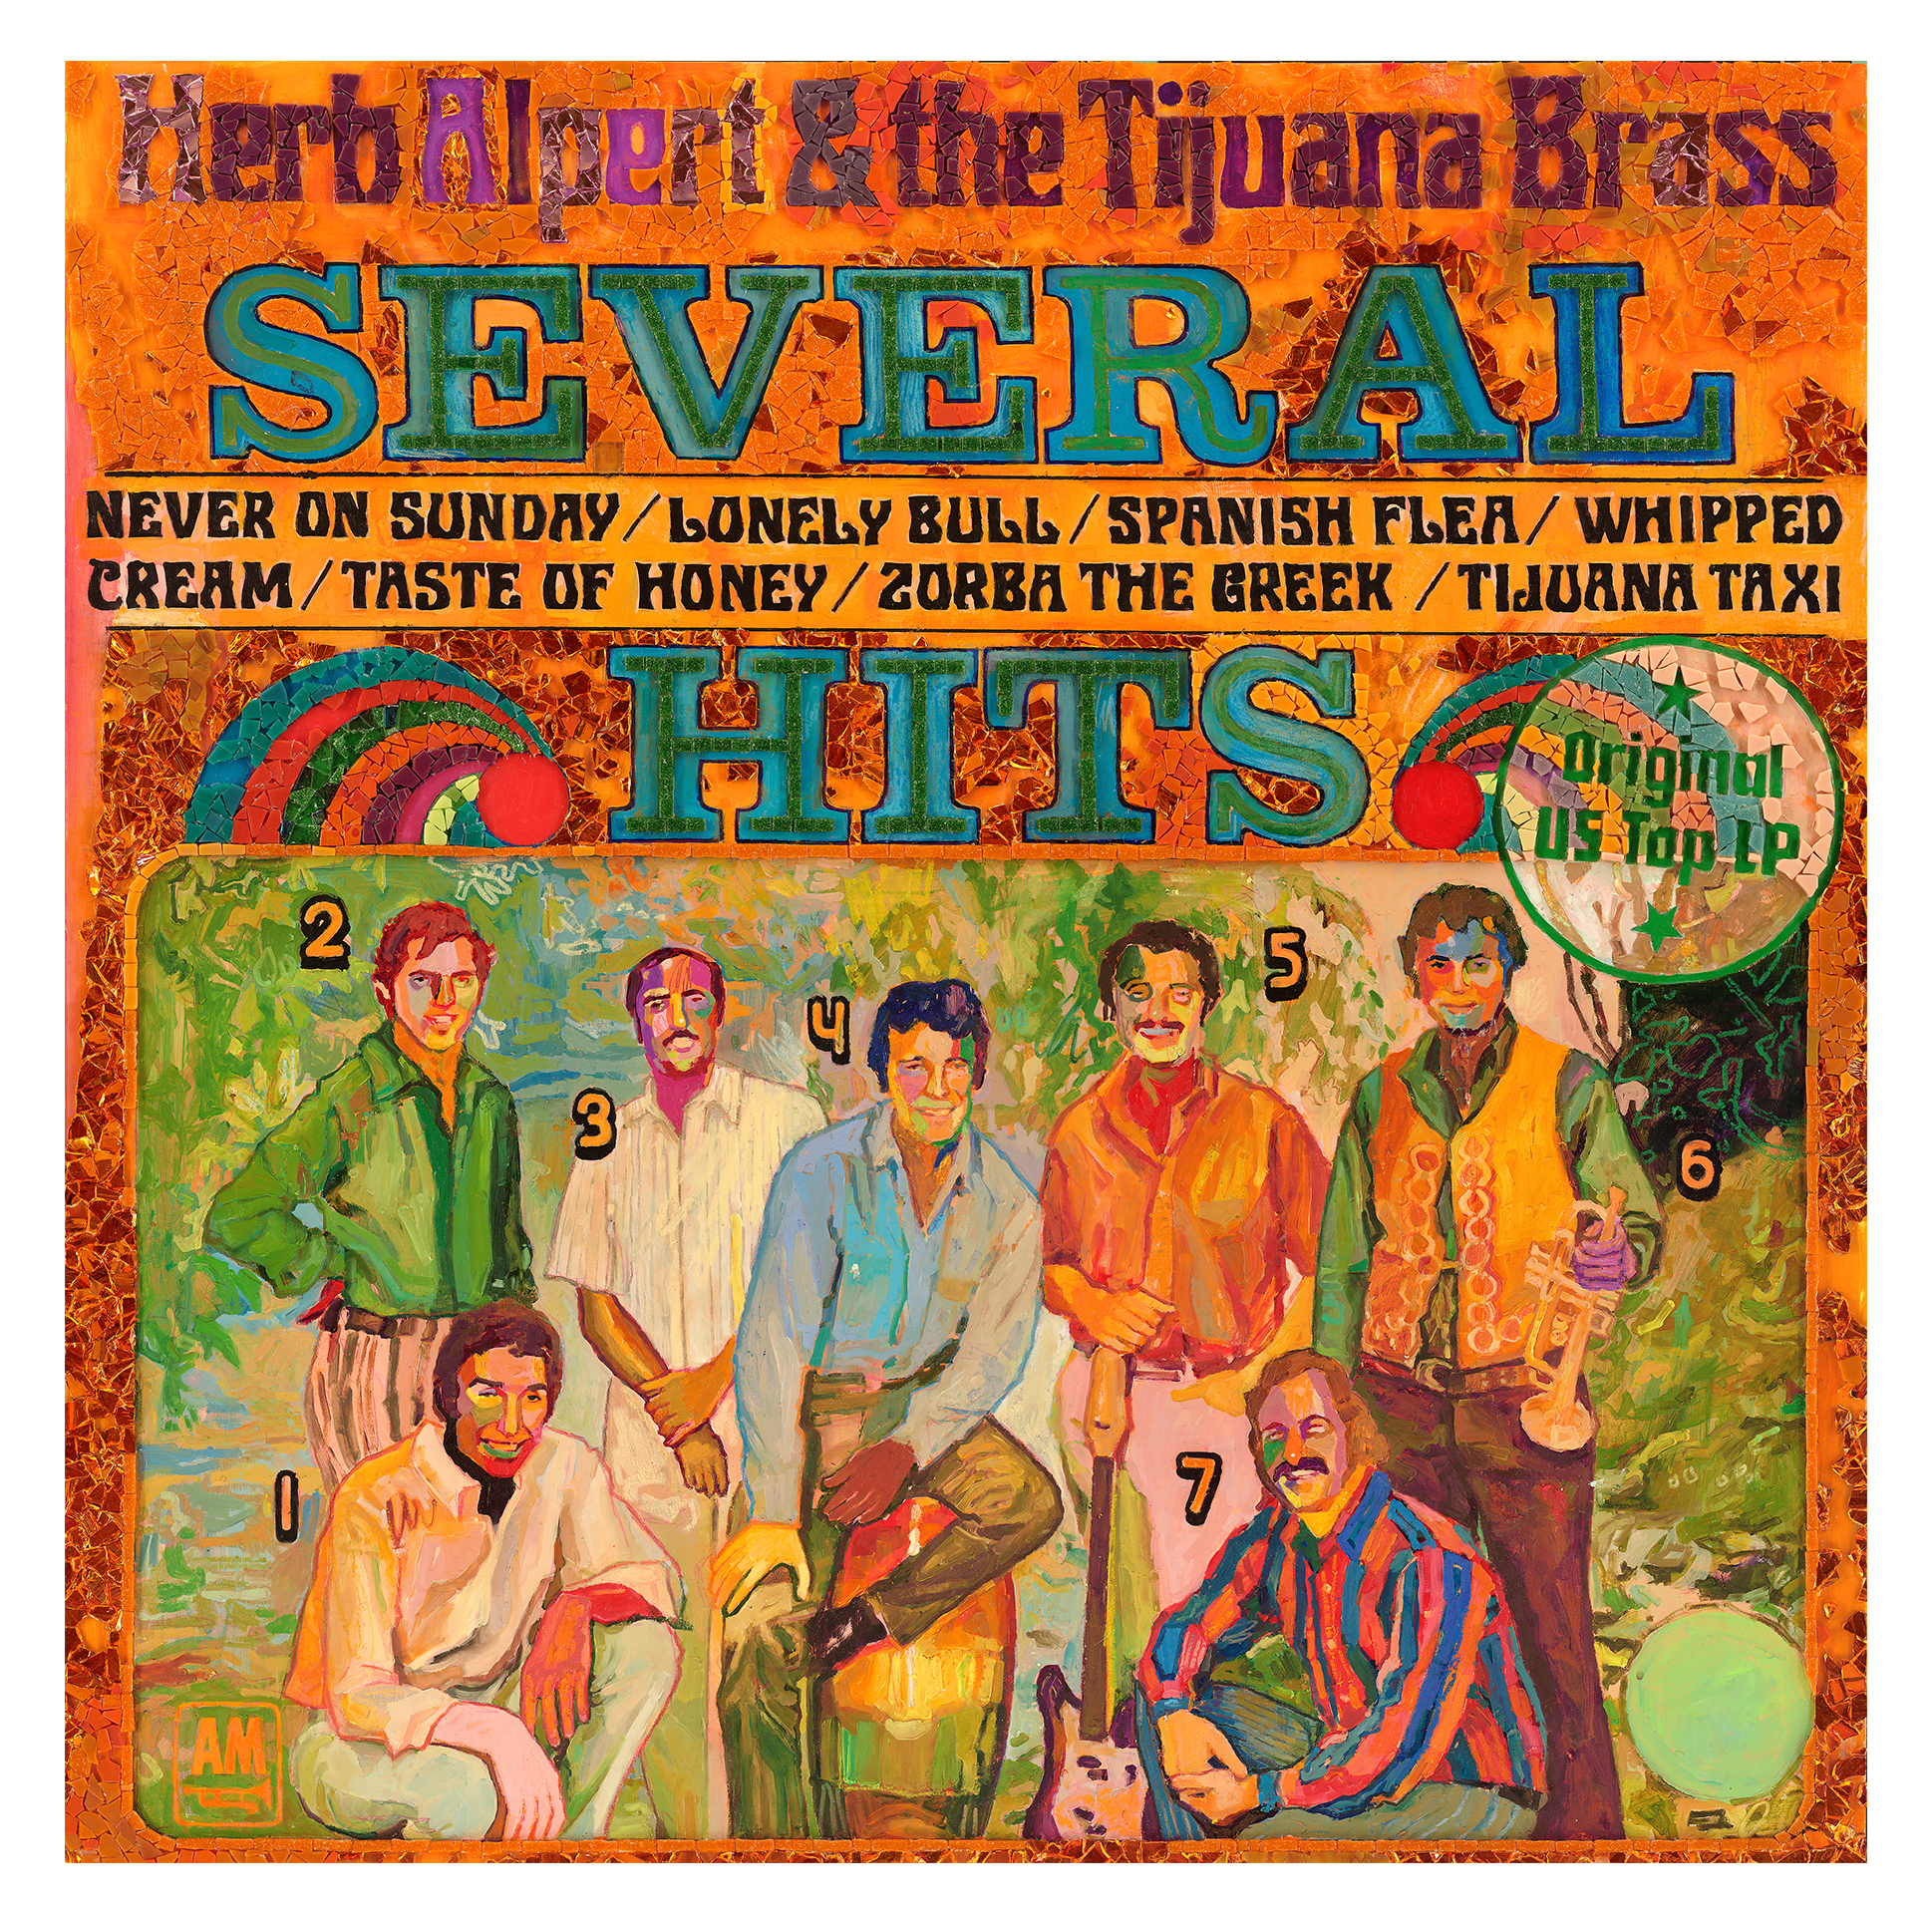 Several // Members of Herb Alpert and the Tijuana Brass